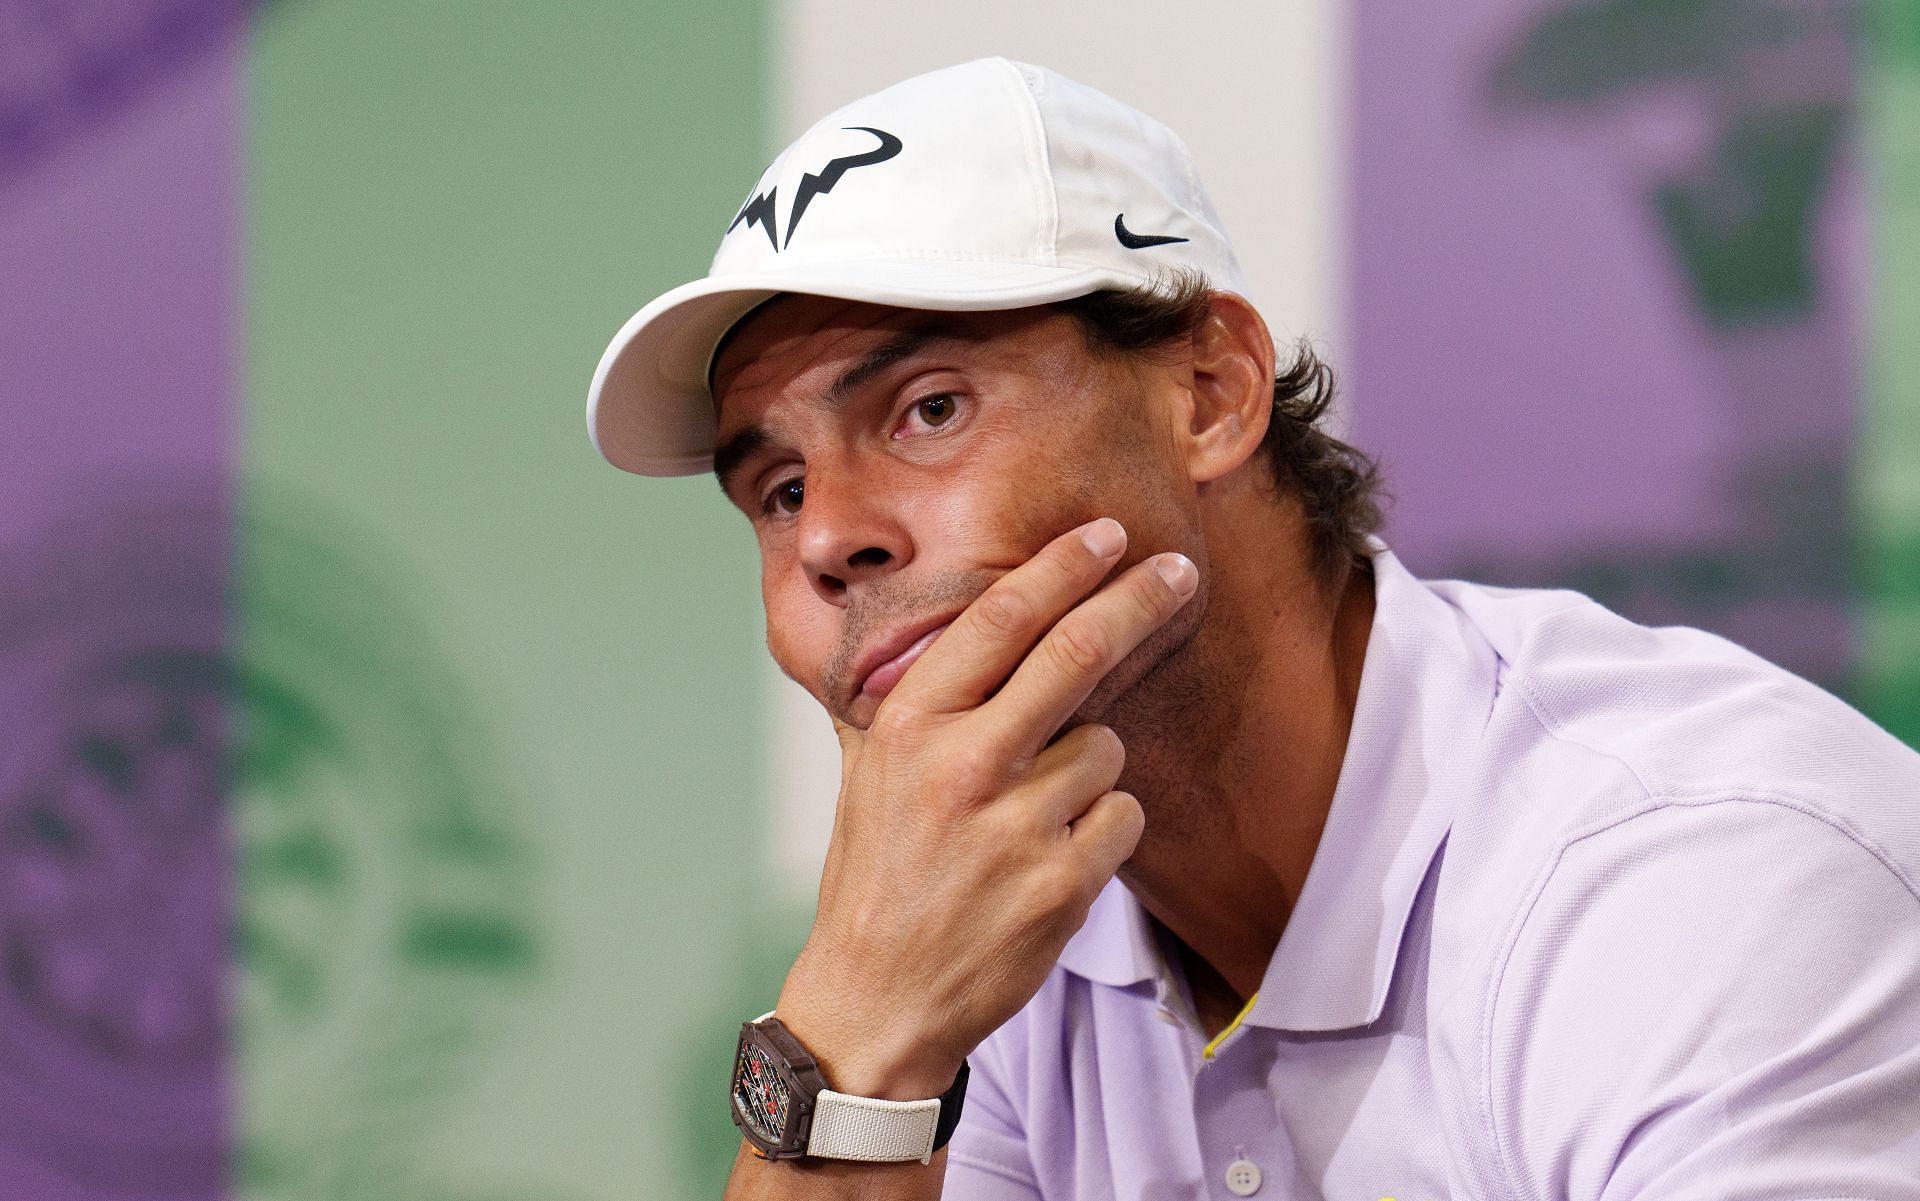 Rafael Nadal looks on at Wimbledon 2022